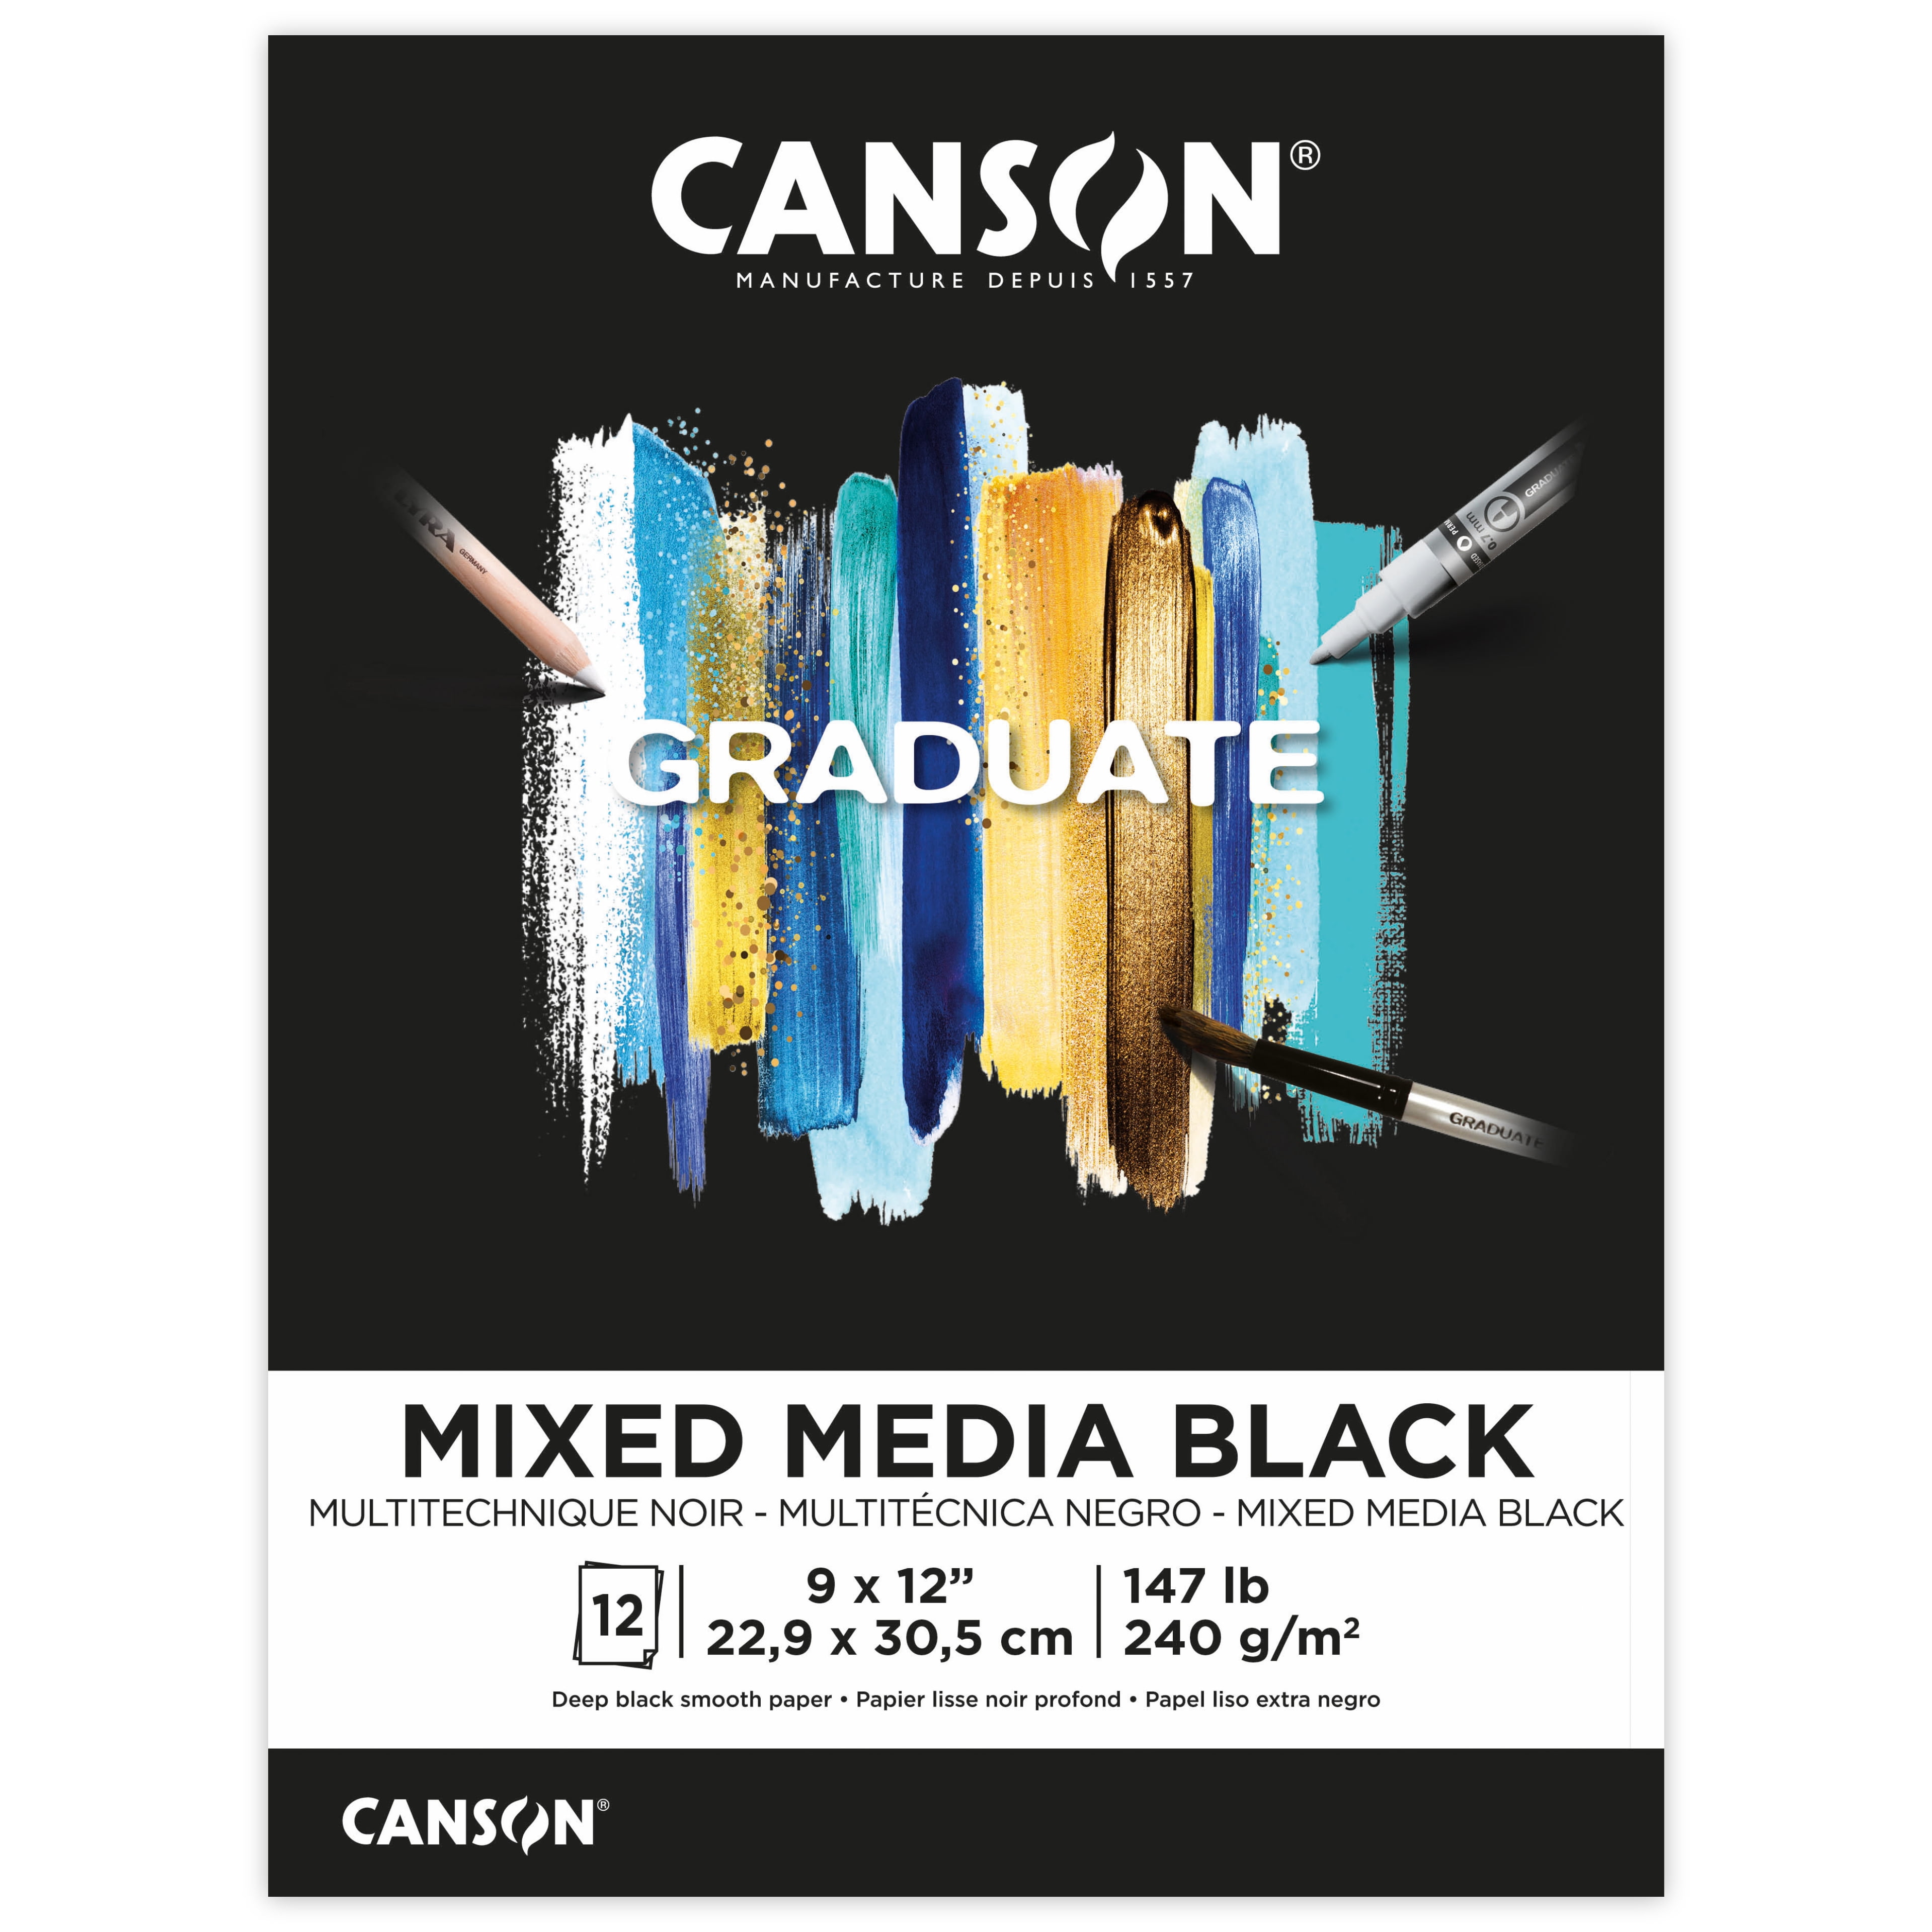 Canson Graduate Black Mixed Media Pad - 9 x 12, 12 Sheets